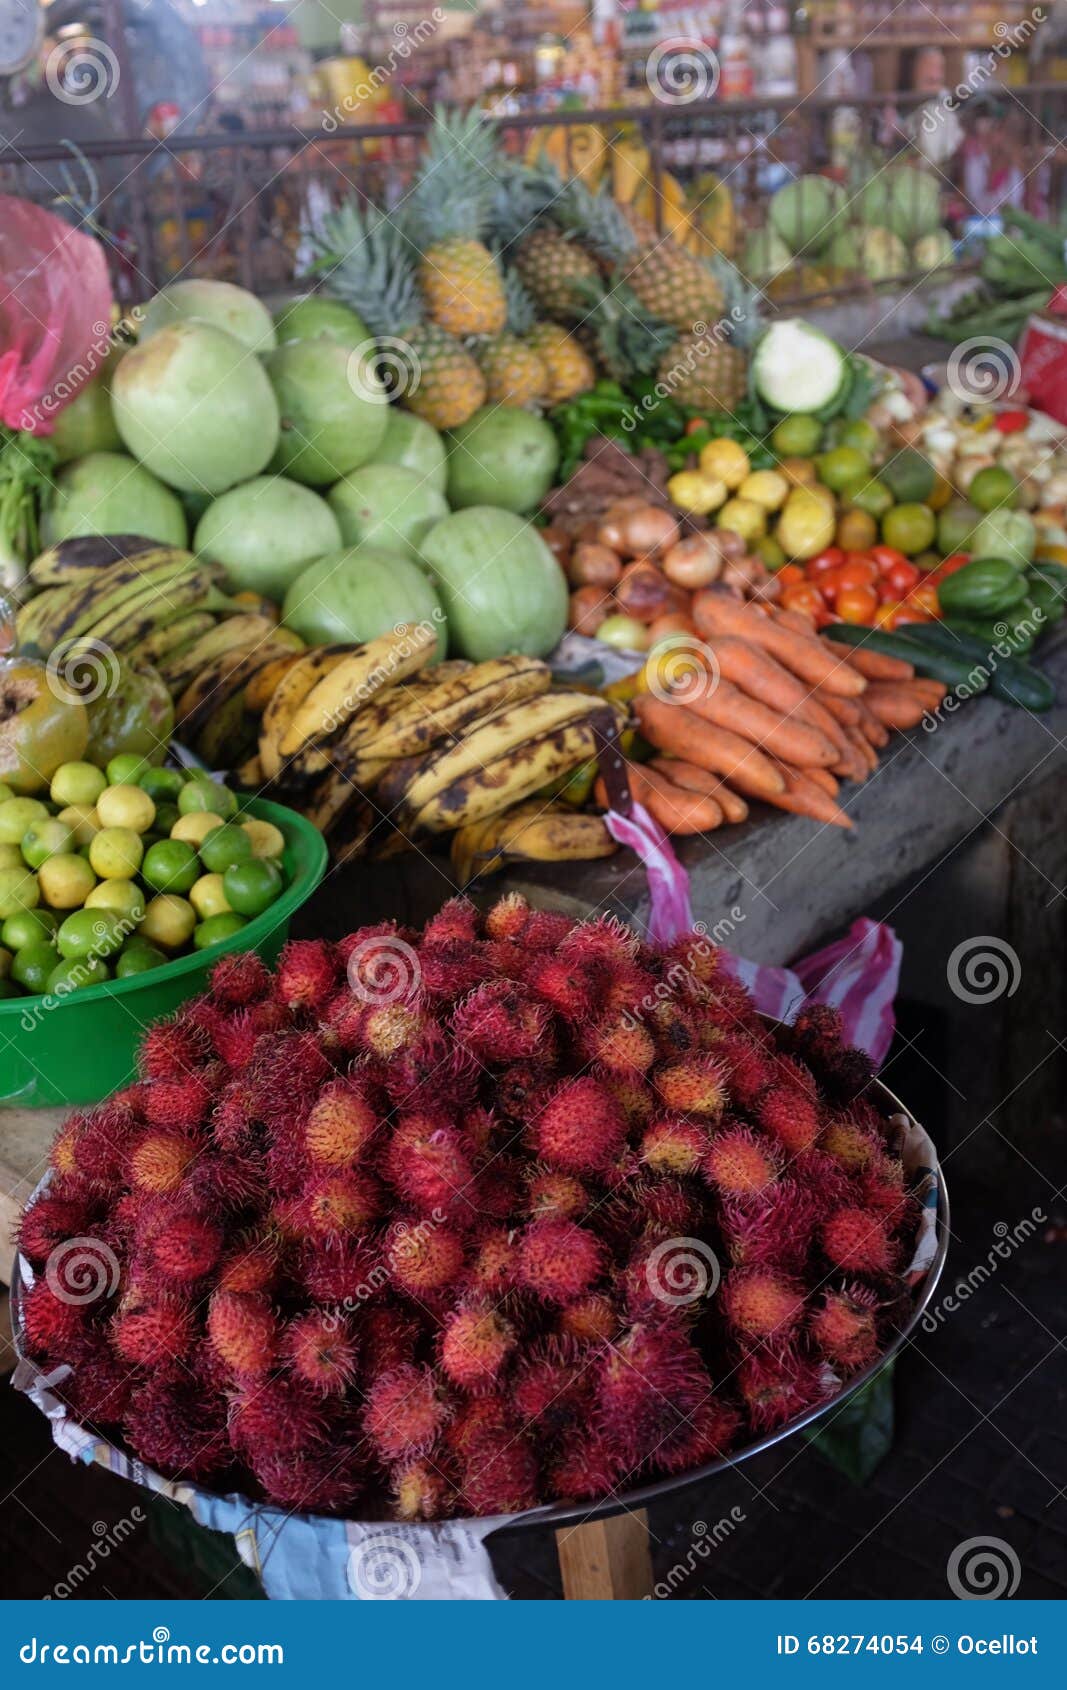 fresh produce market in leon, nicaragua